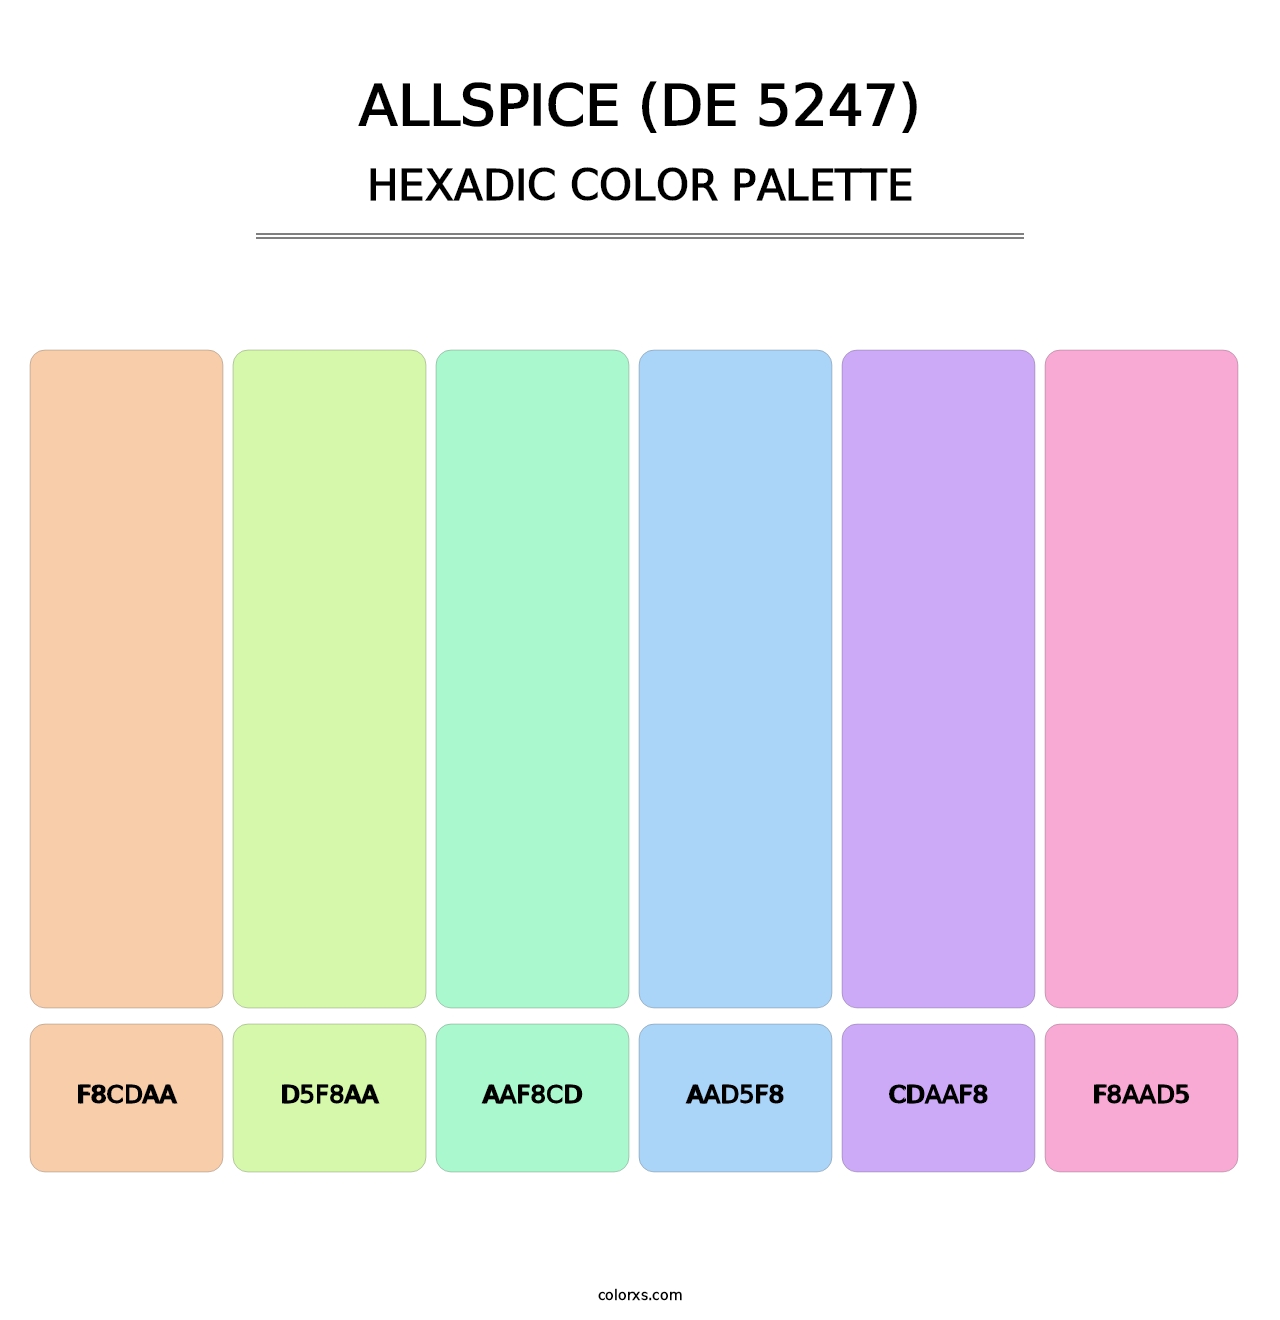 Allspice (DE 5247) - Hexadic Color Palette